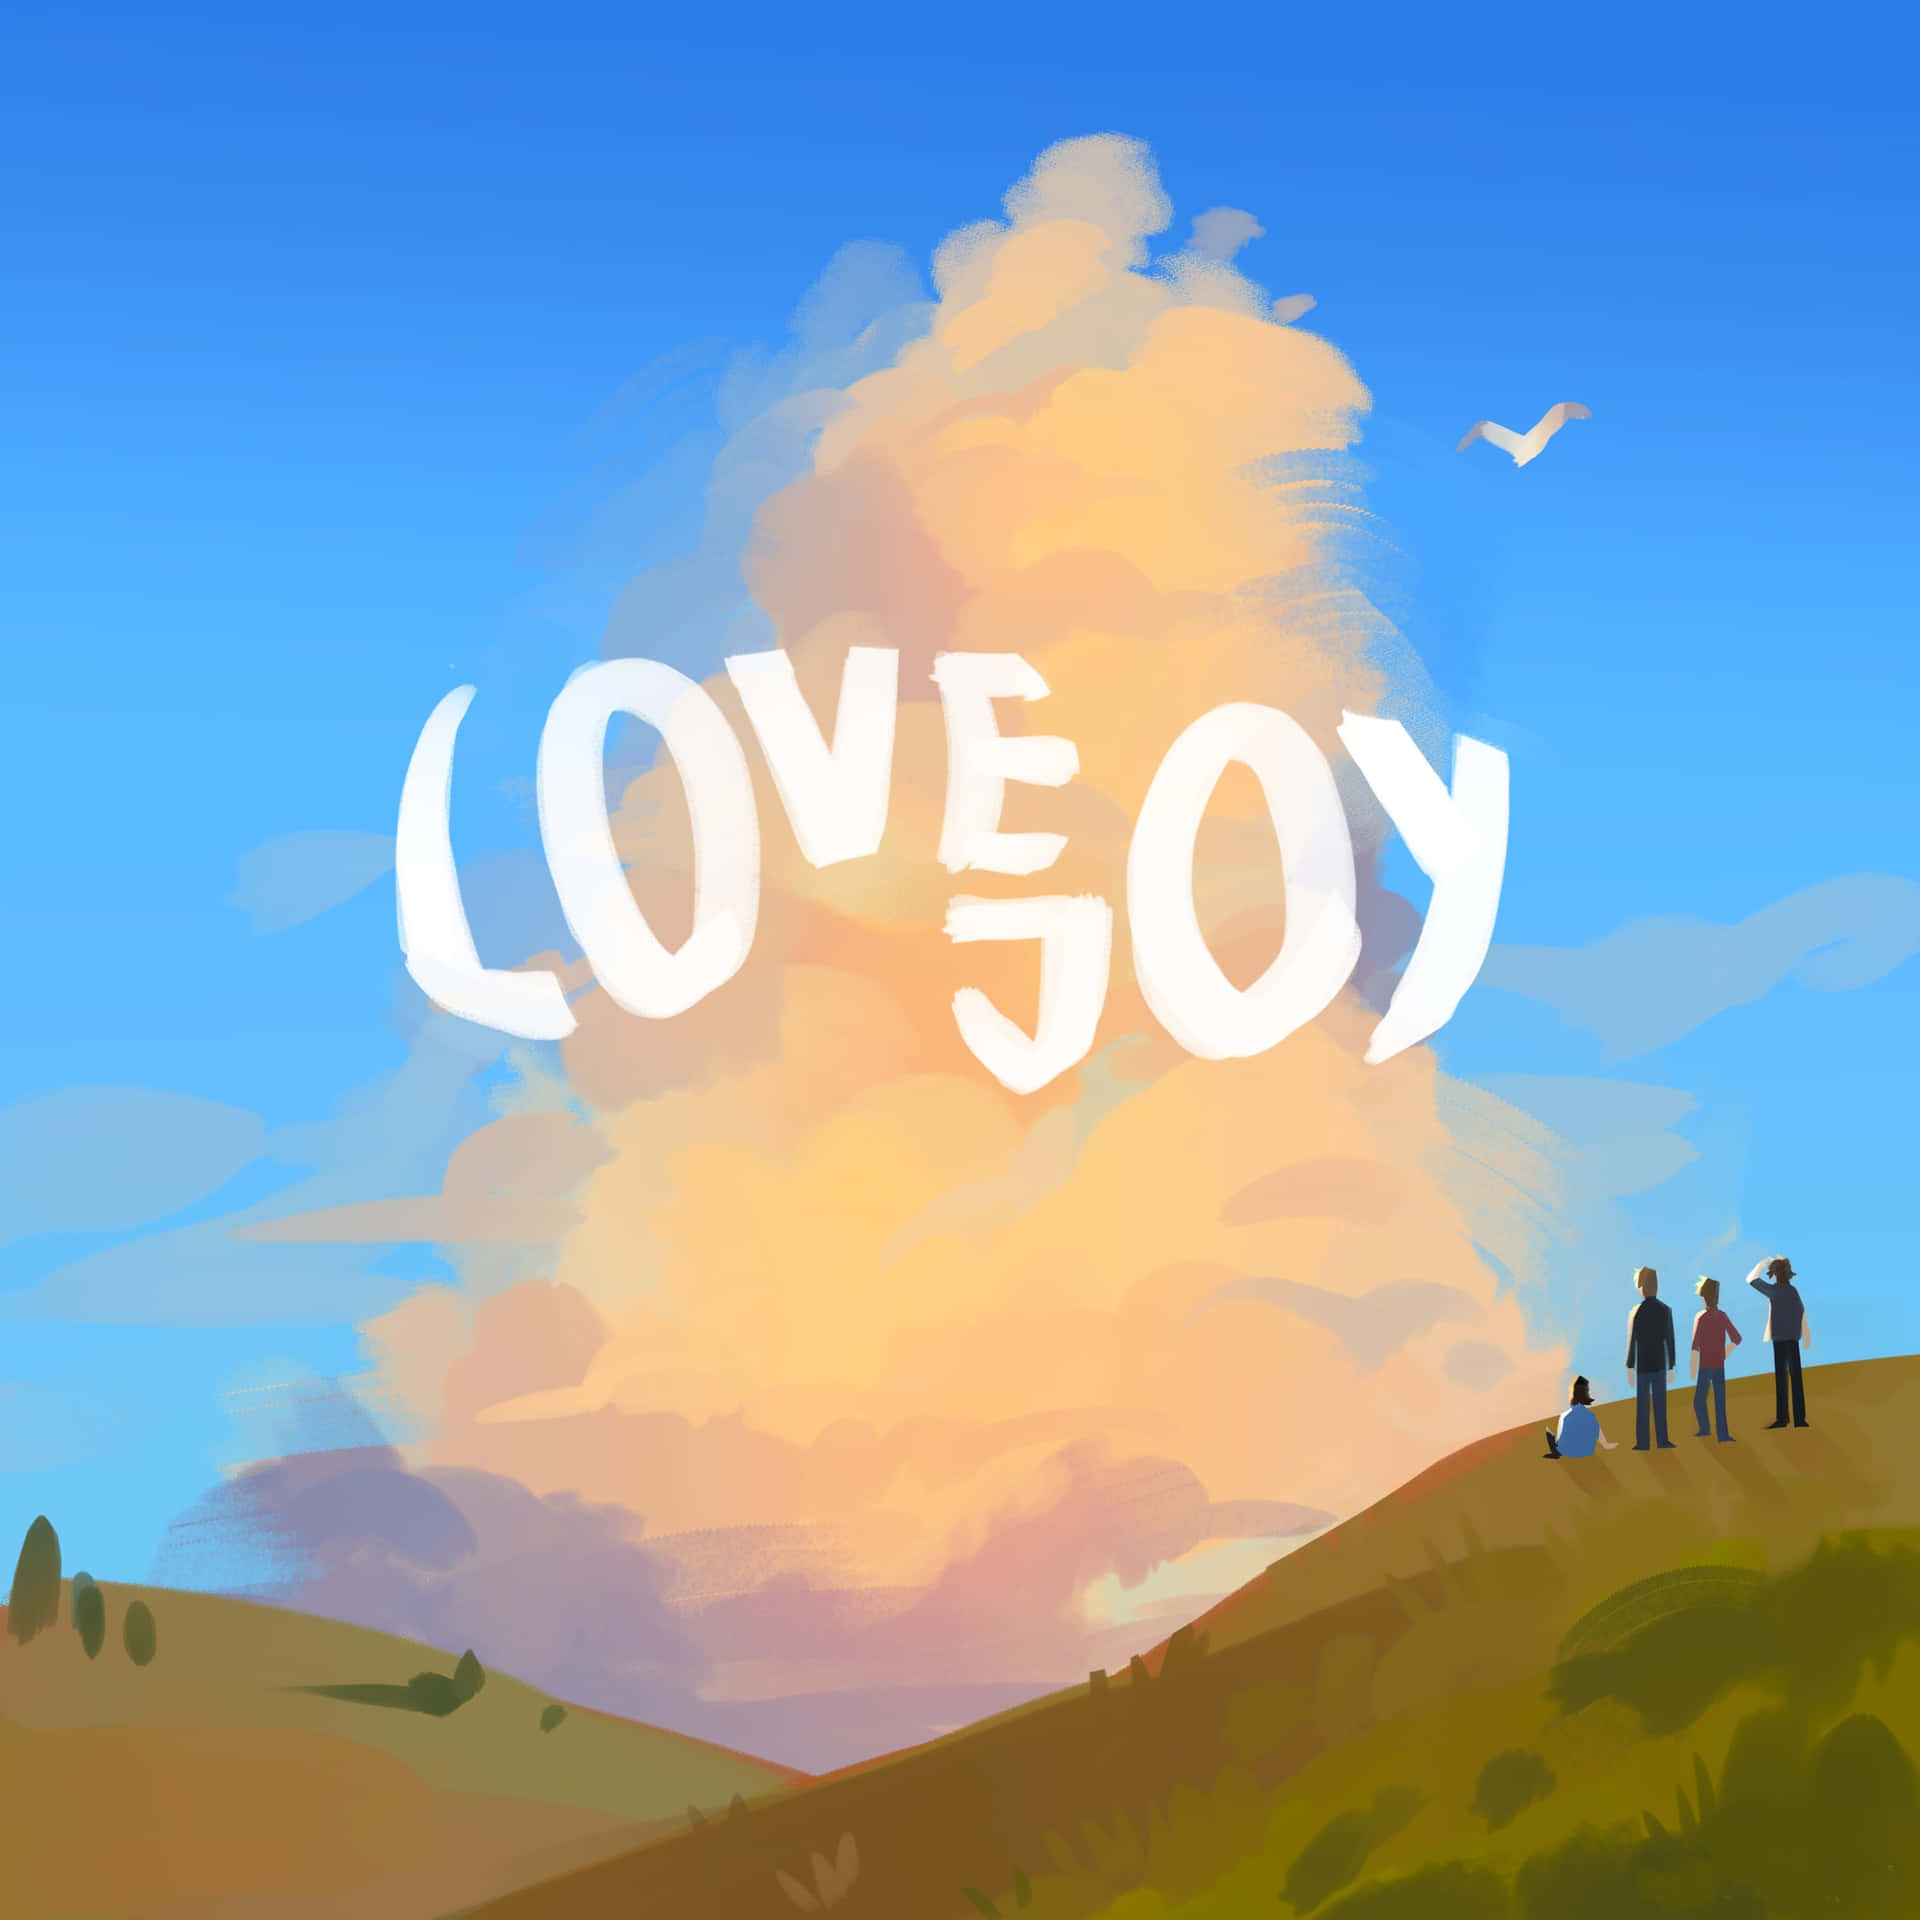 "Choose love and joy" Wallpaper